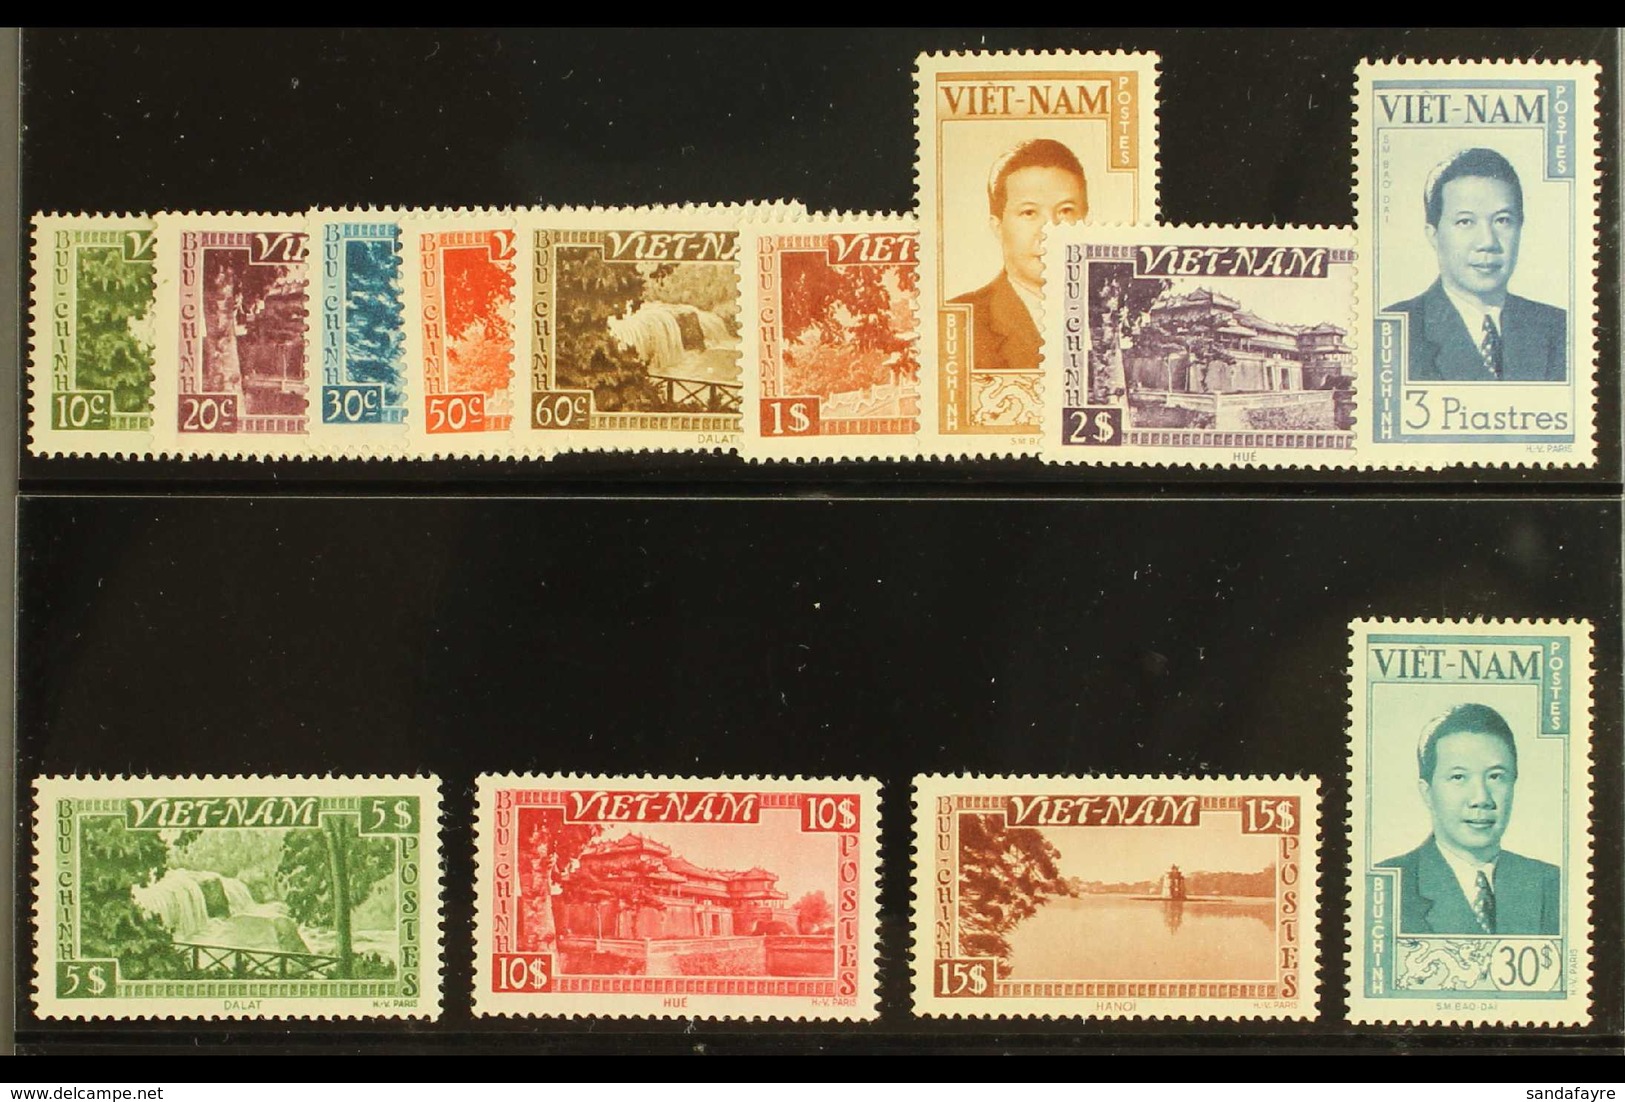 INDEPENDENT STATE 1951 Definitives Complete Set (SG 61/73, Scott 1/13) Very Fine Never Hinged Mint. (13 Stamps) For More - Viêt-Nam